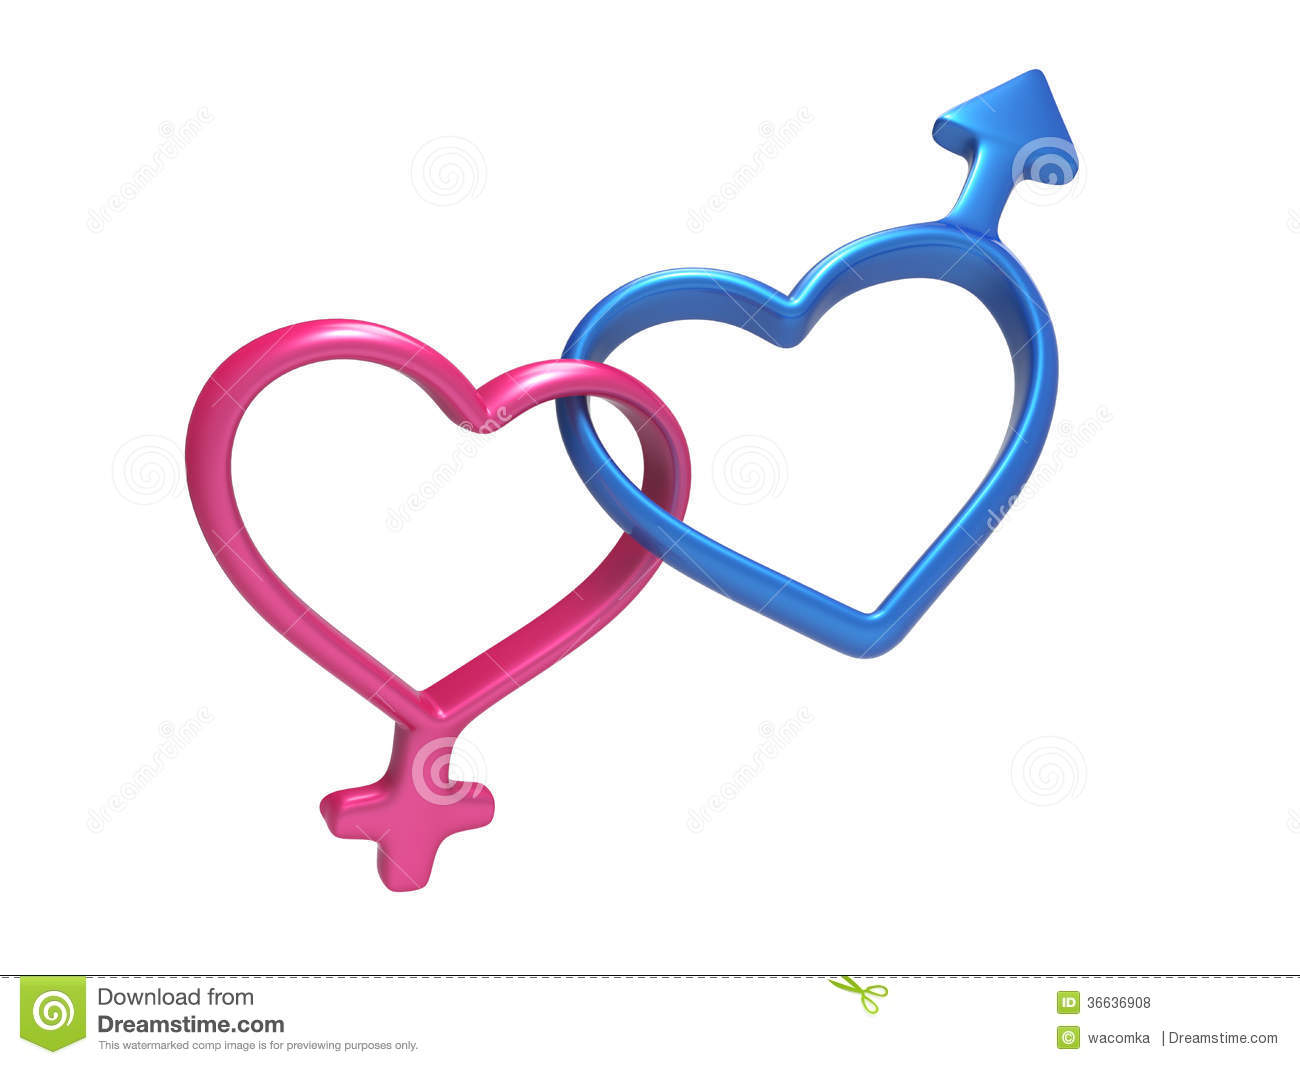 3d Colorful Hearts Gender Symbols Linked Together Royalty Free Stock